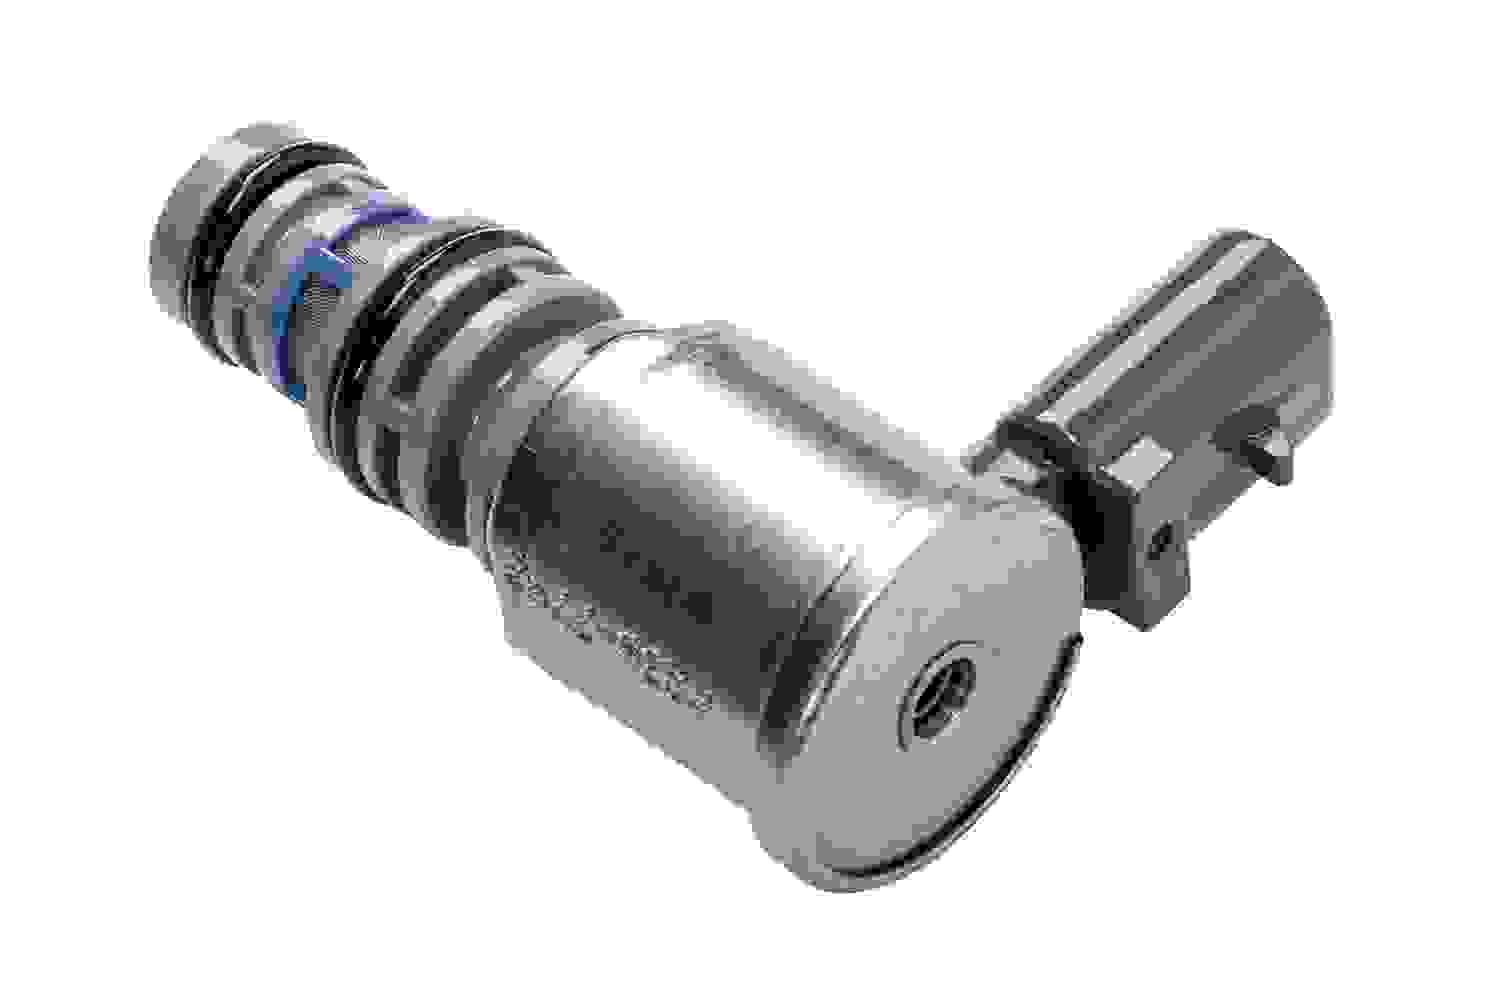 GM GENUINE PARTS - Automatic Transmission Torque Converter Clutch Pulse Width Modulation Solenoid - GMP 24227792